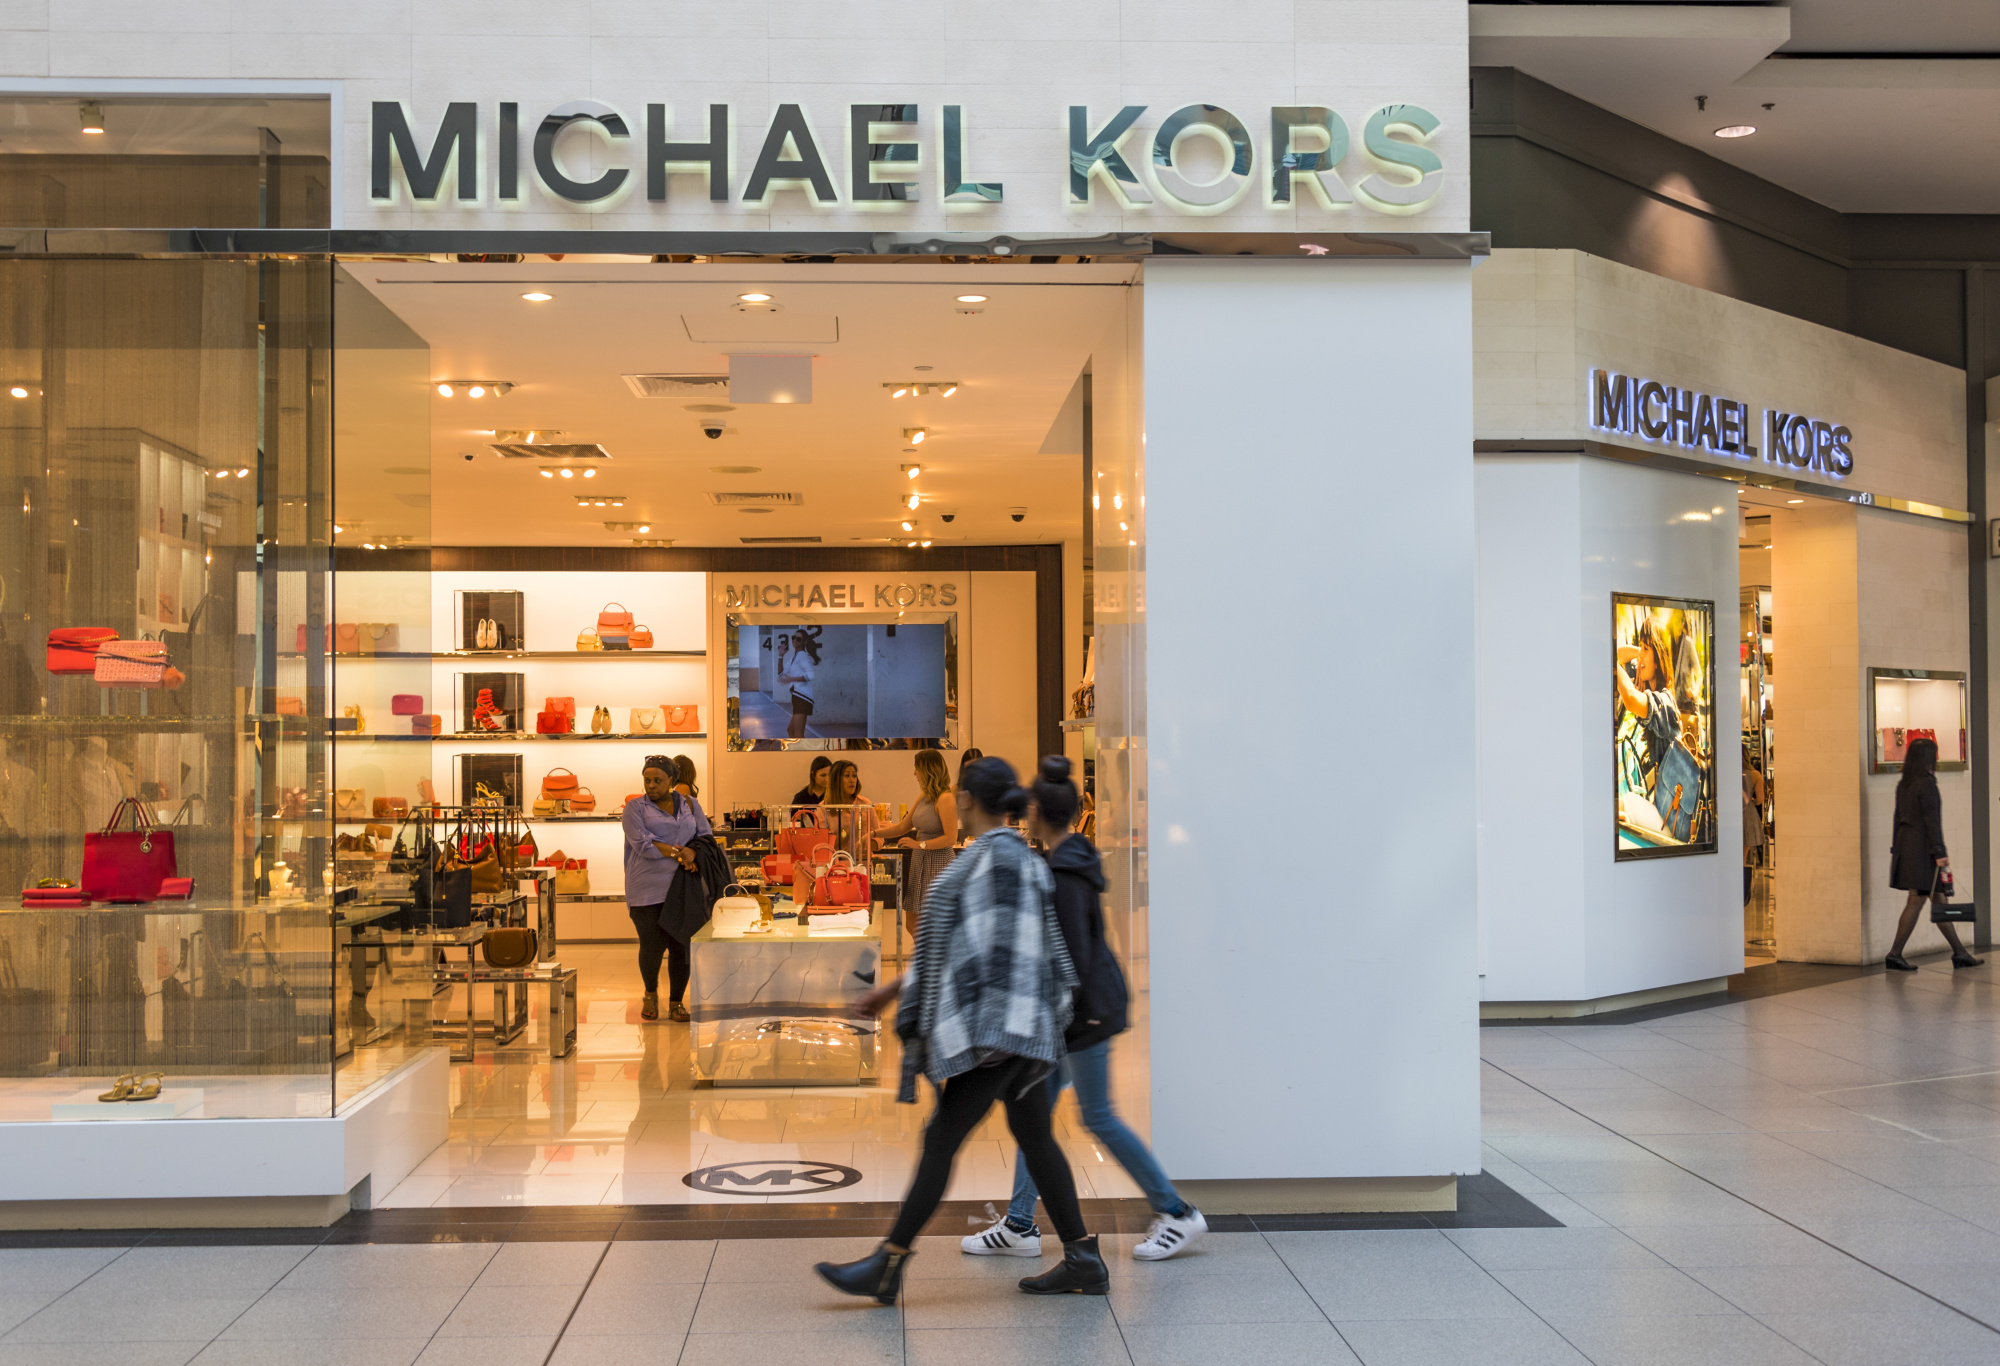 Michael Kors Sales Increase for Q4 2015